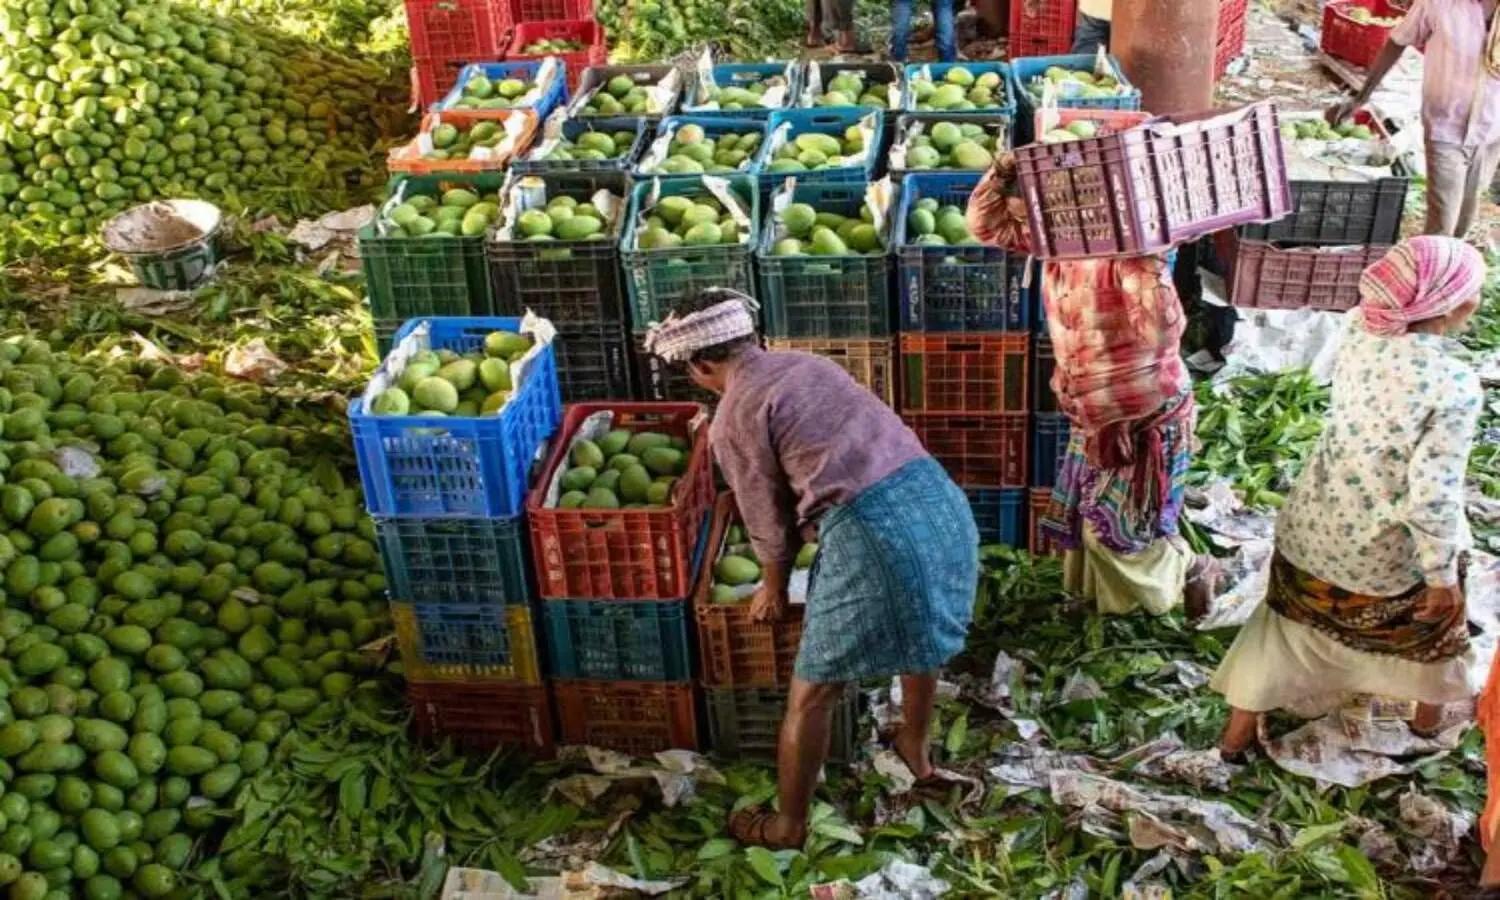 Shift your business within one month: Telangana HC to Gaddiannaram fruit agents